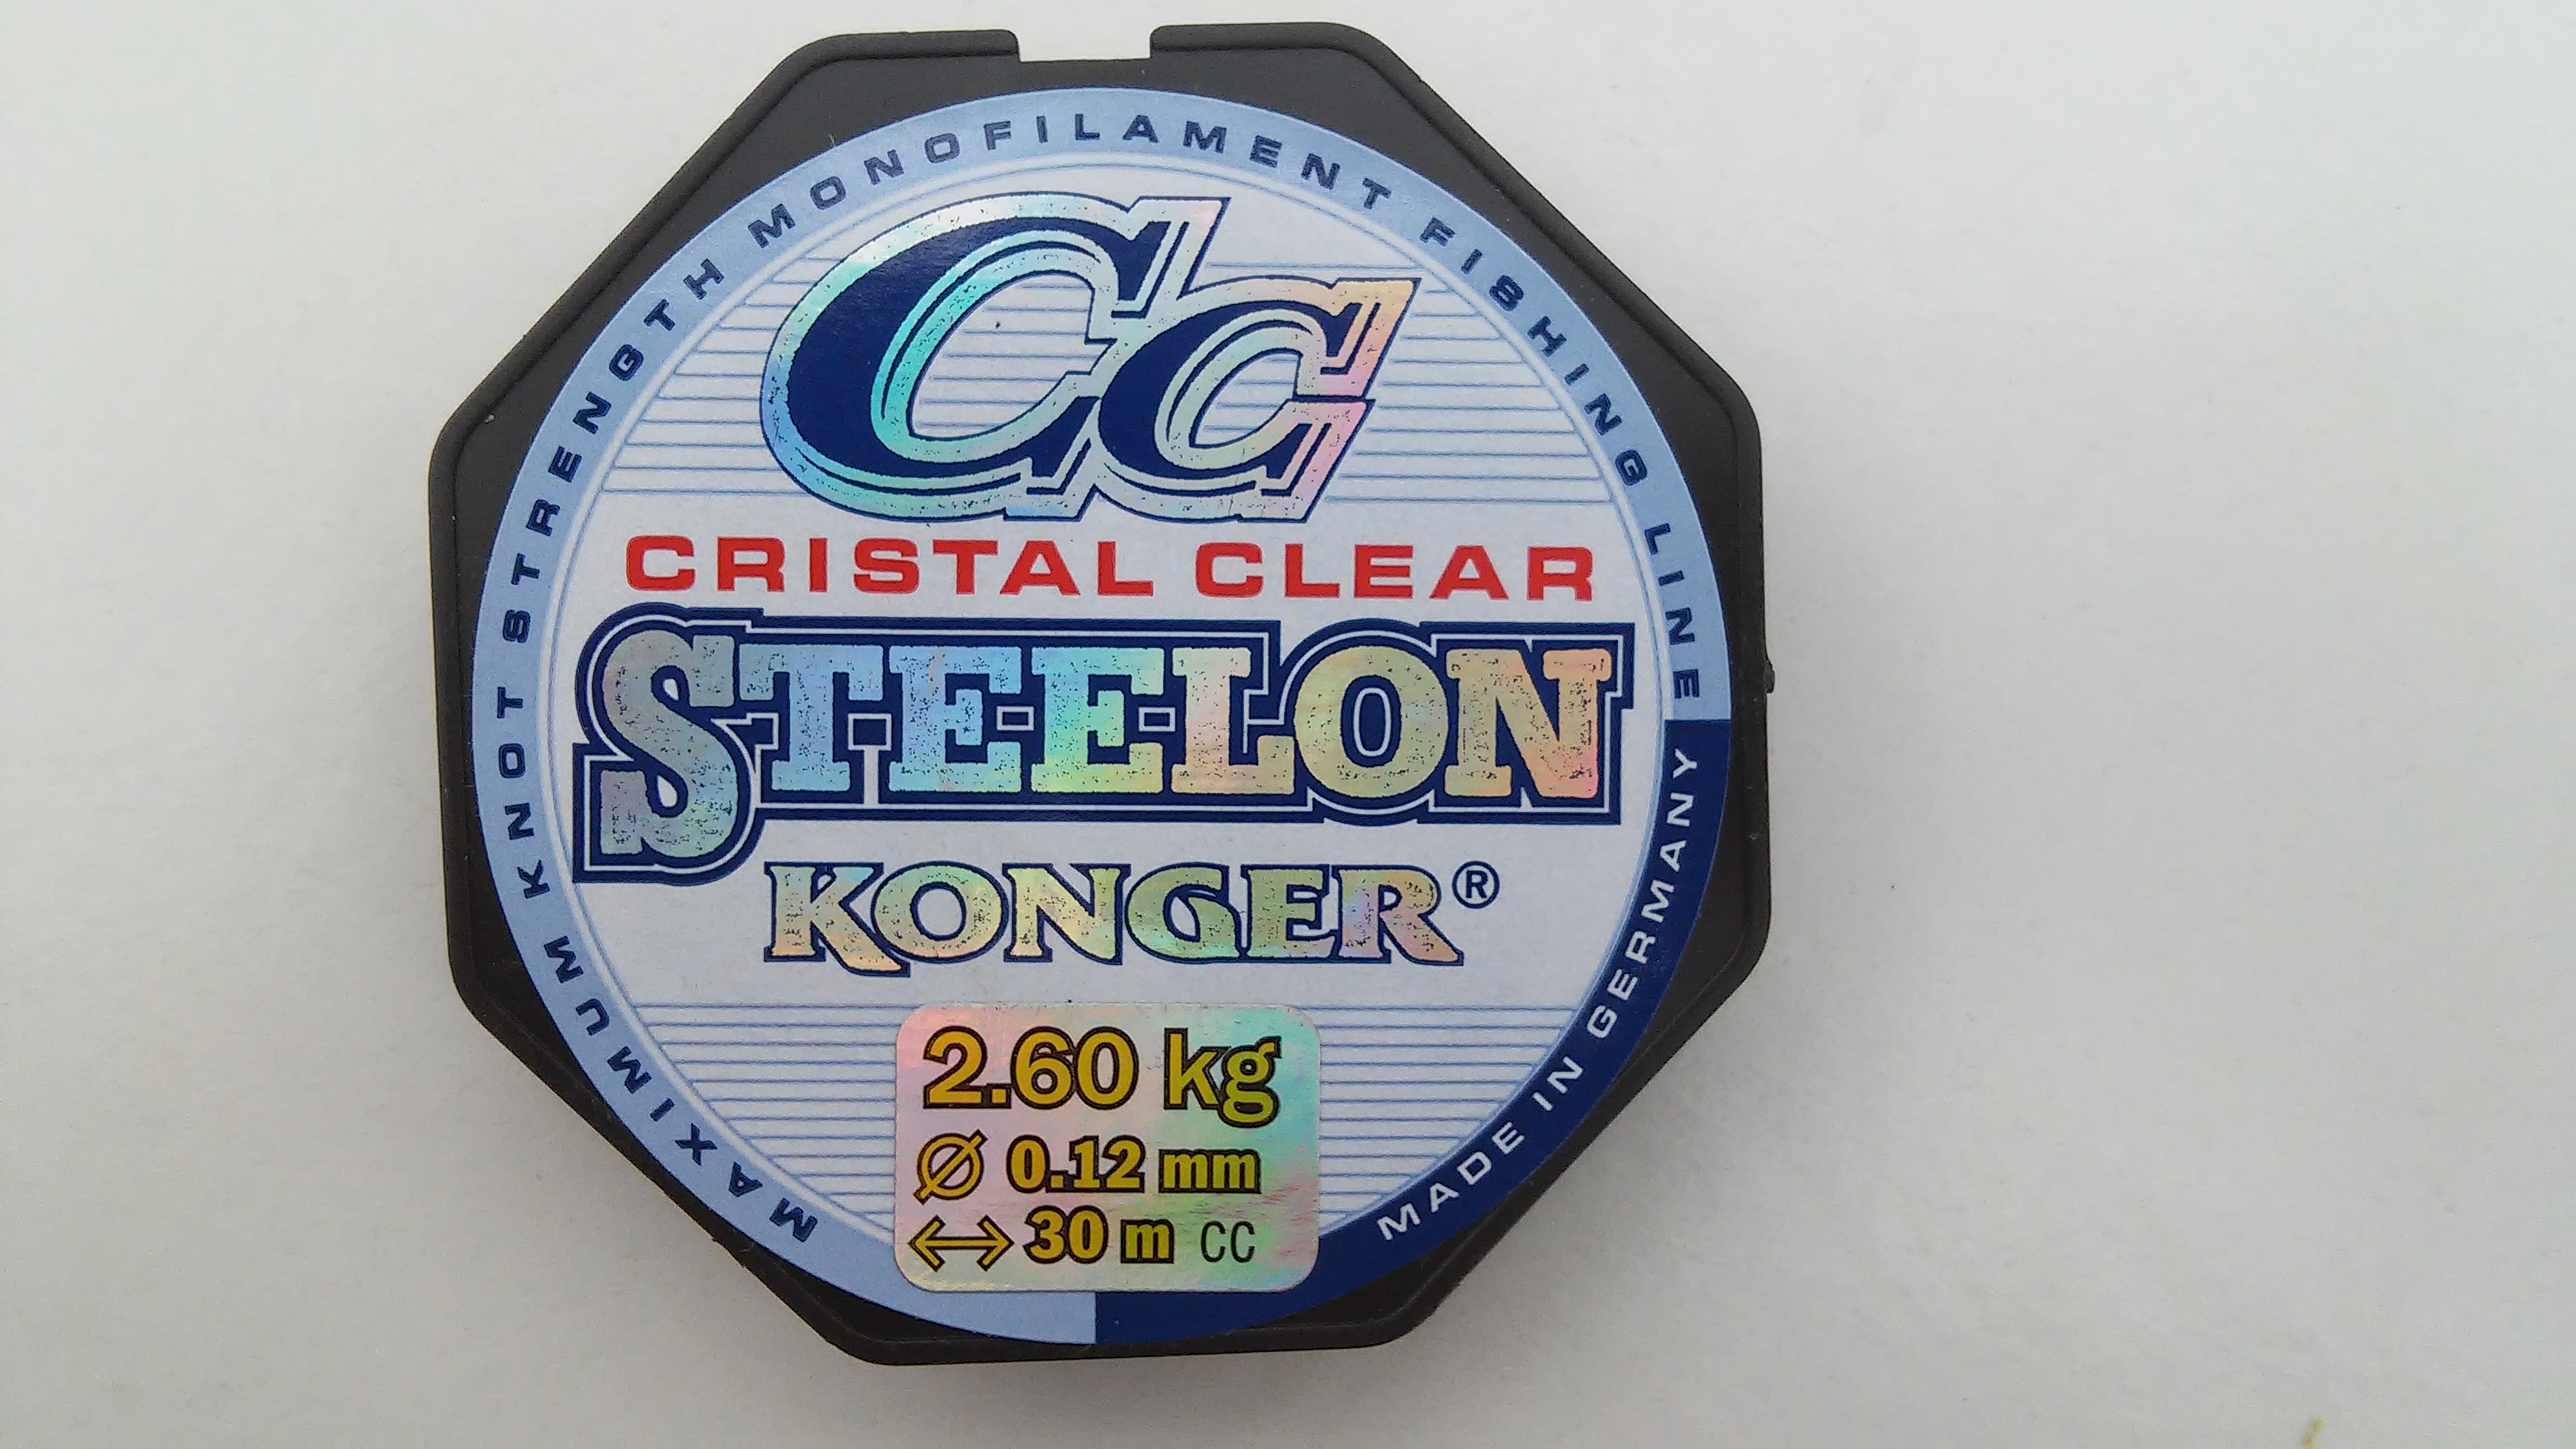 Konger Steelon Cristal Clear 30m 0,12 mm